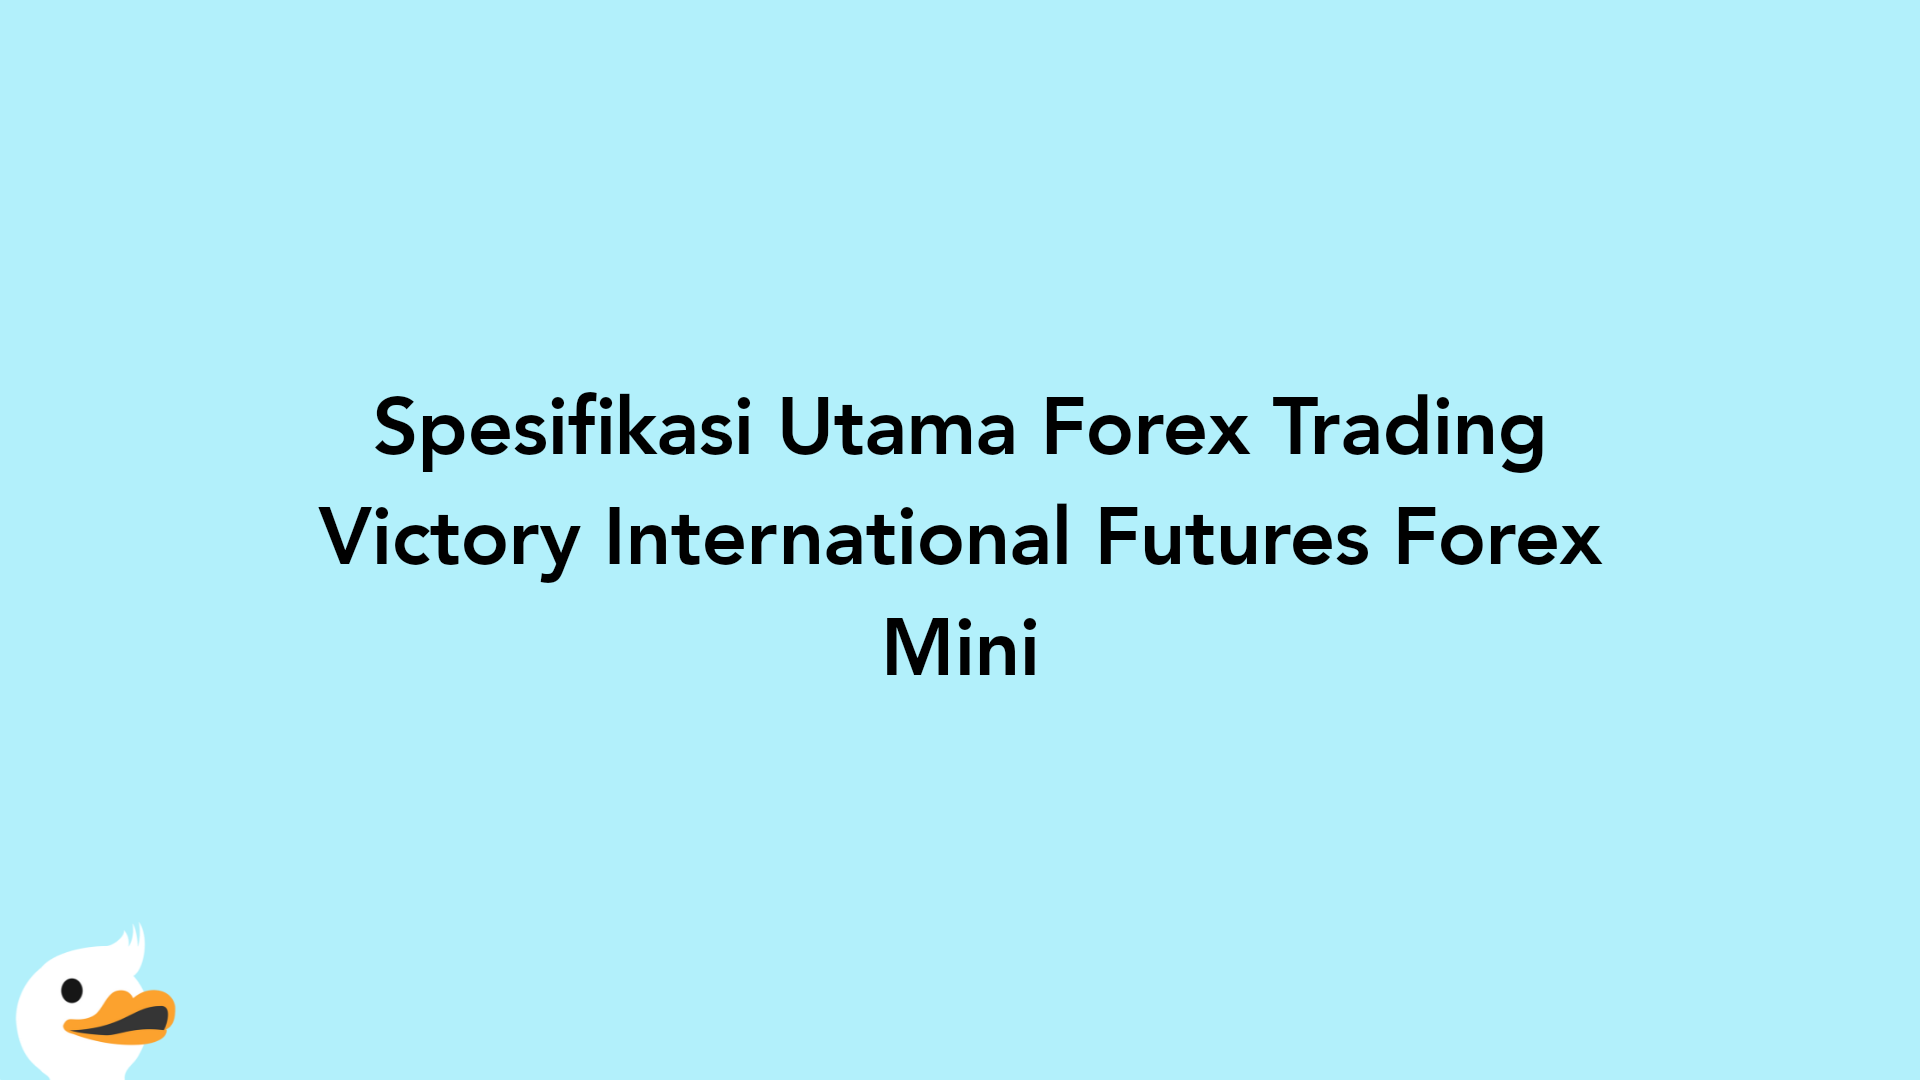 Spesifikasi Utama Forex Trading Victory International Futures Forex Mini